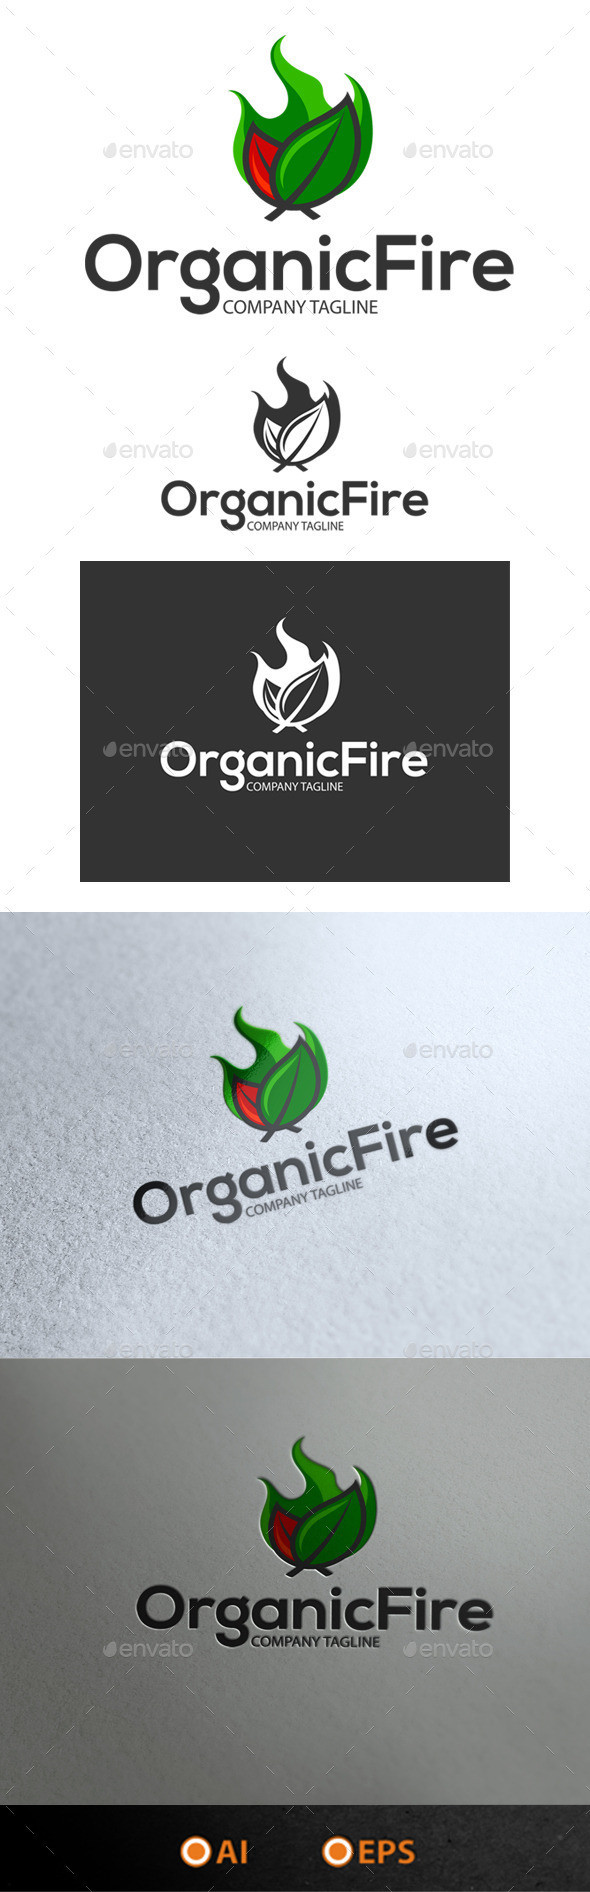 Organicfire preview